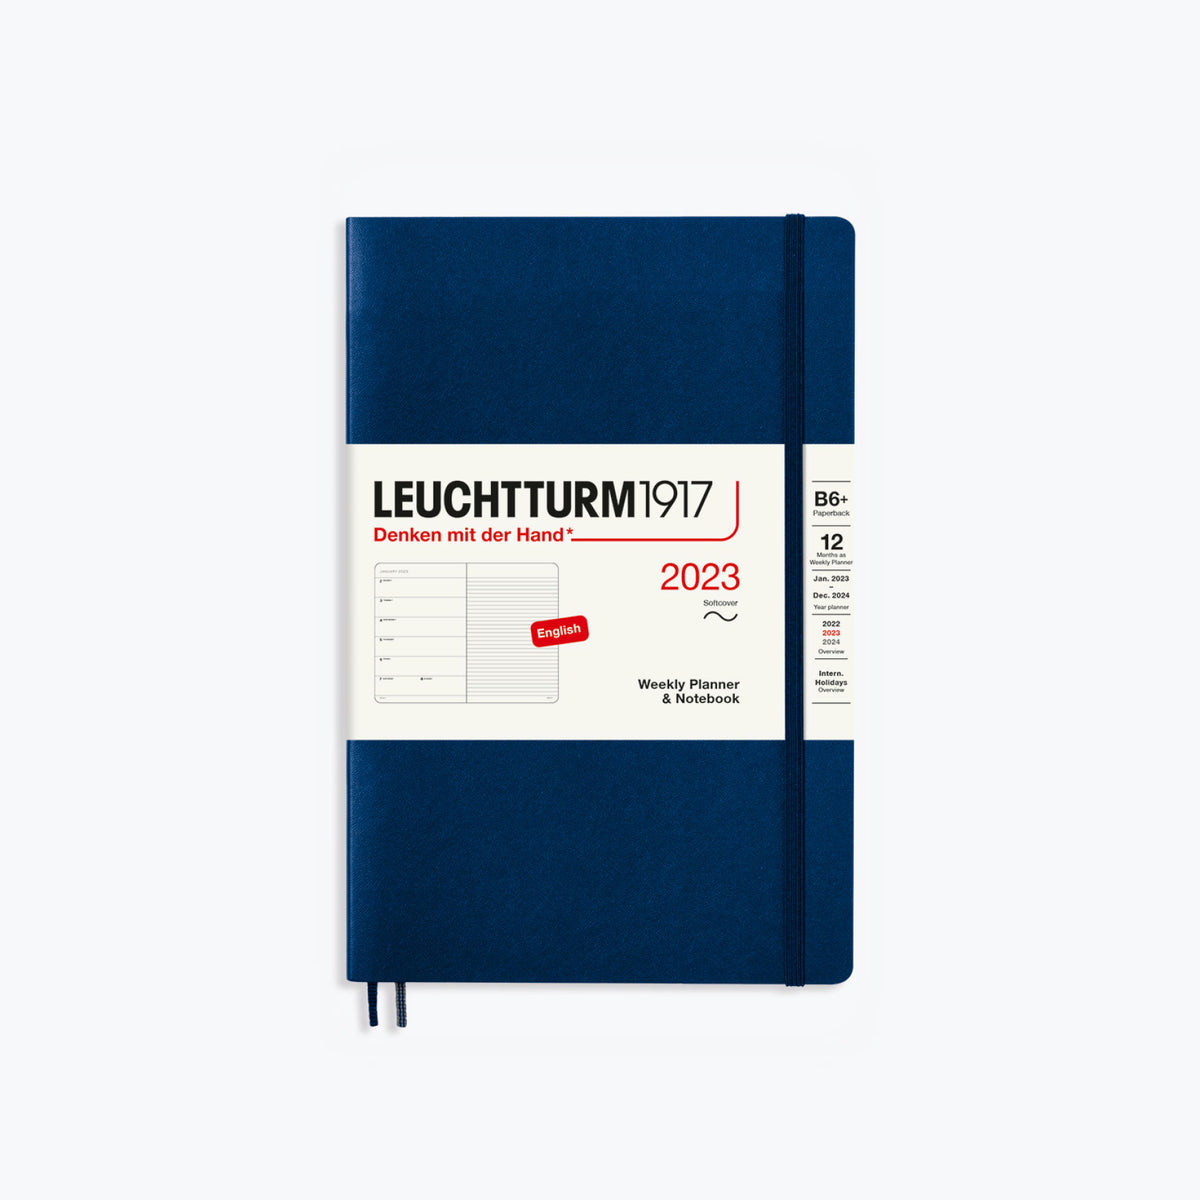 Leuchtturm1917 - 2024 Diary - Weekly Notebook - B6+ - Navy